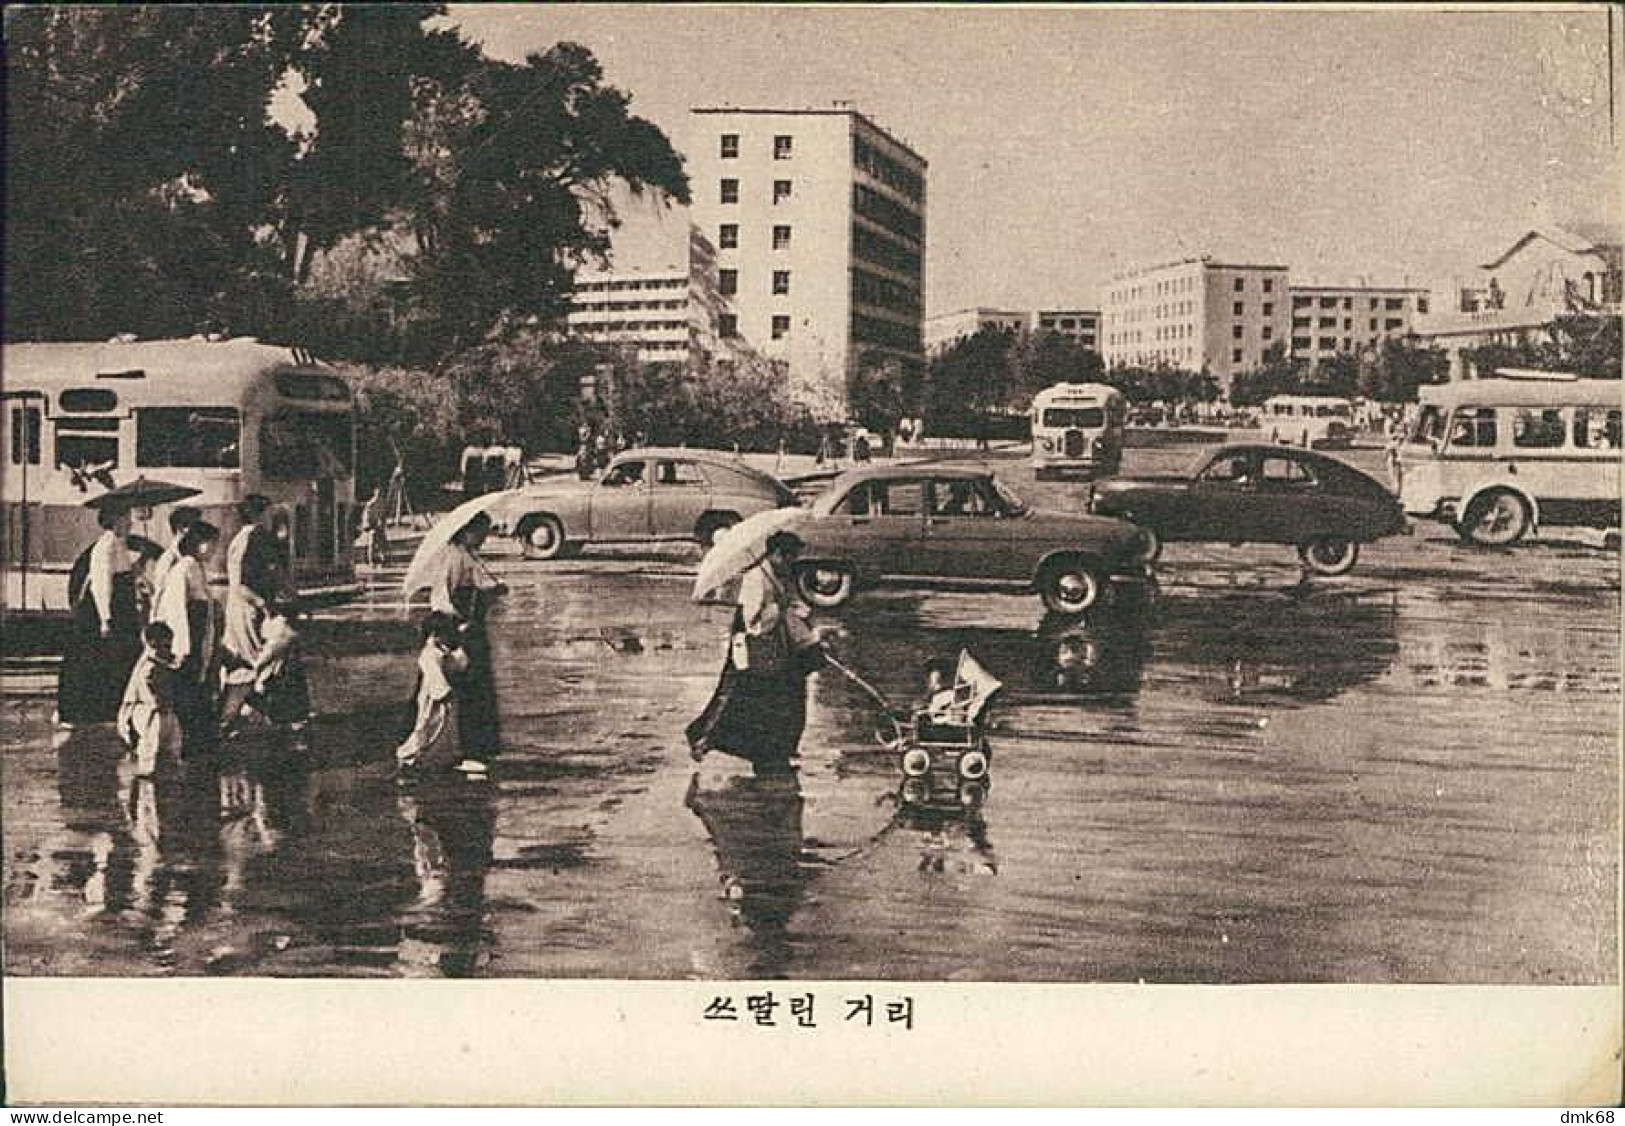 NORTH KOREA - PYONGYANG - THE STALIN STREET - 1960s (18369) - Korea (Nord)